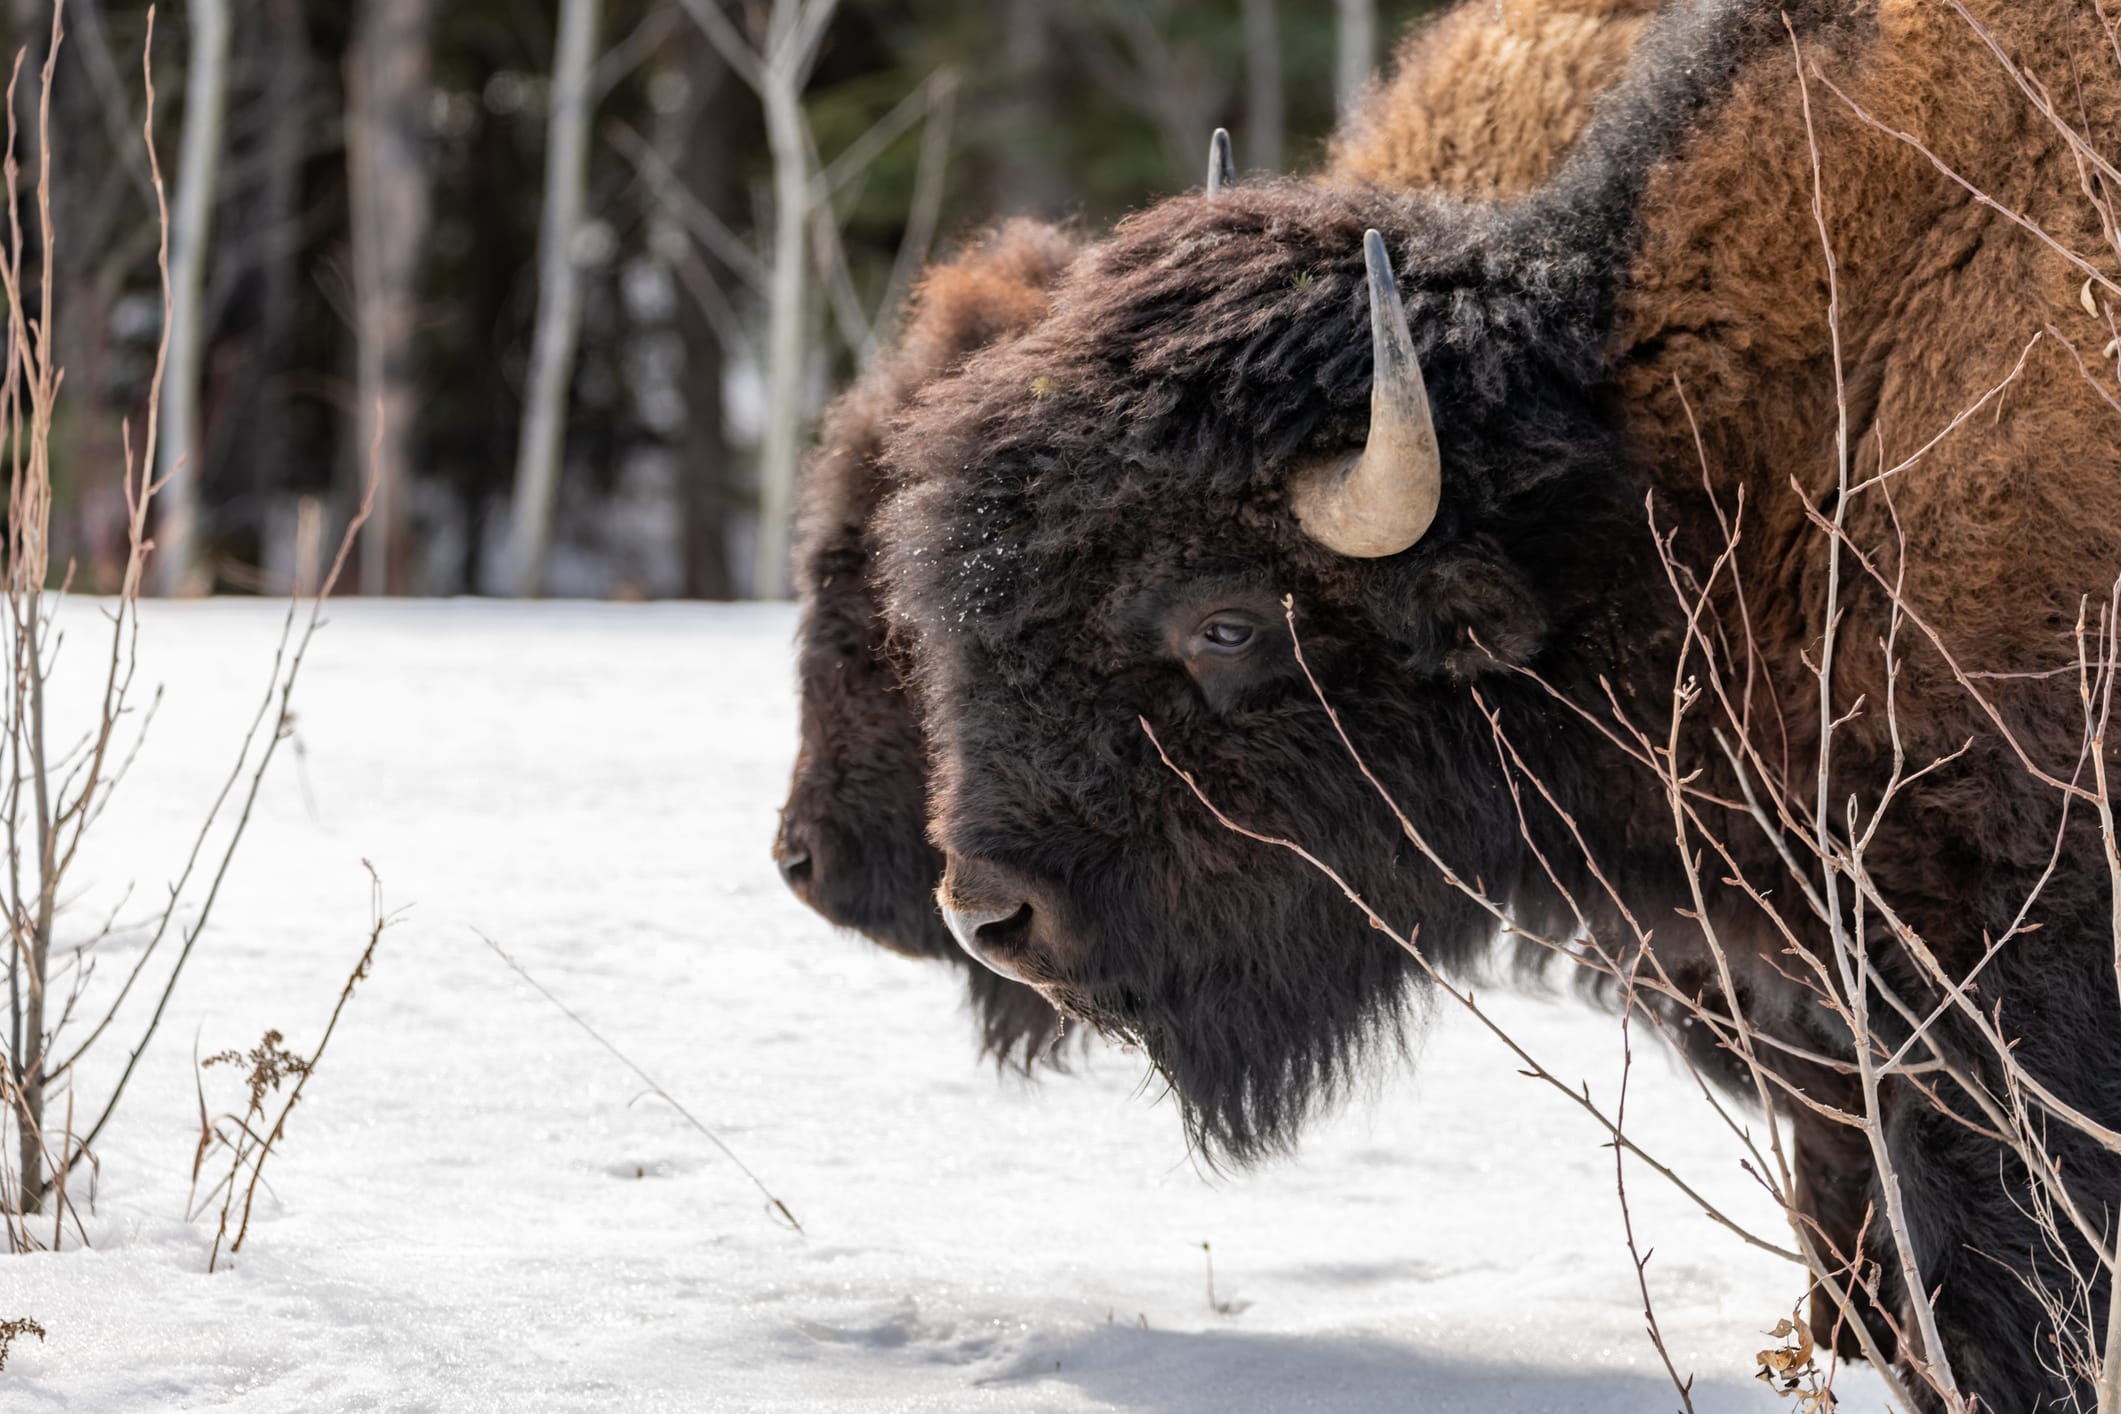 Wild wood Bison seen in Canada